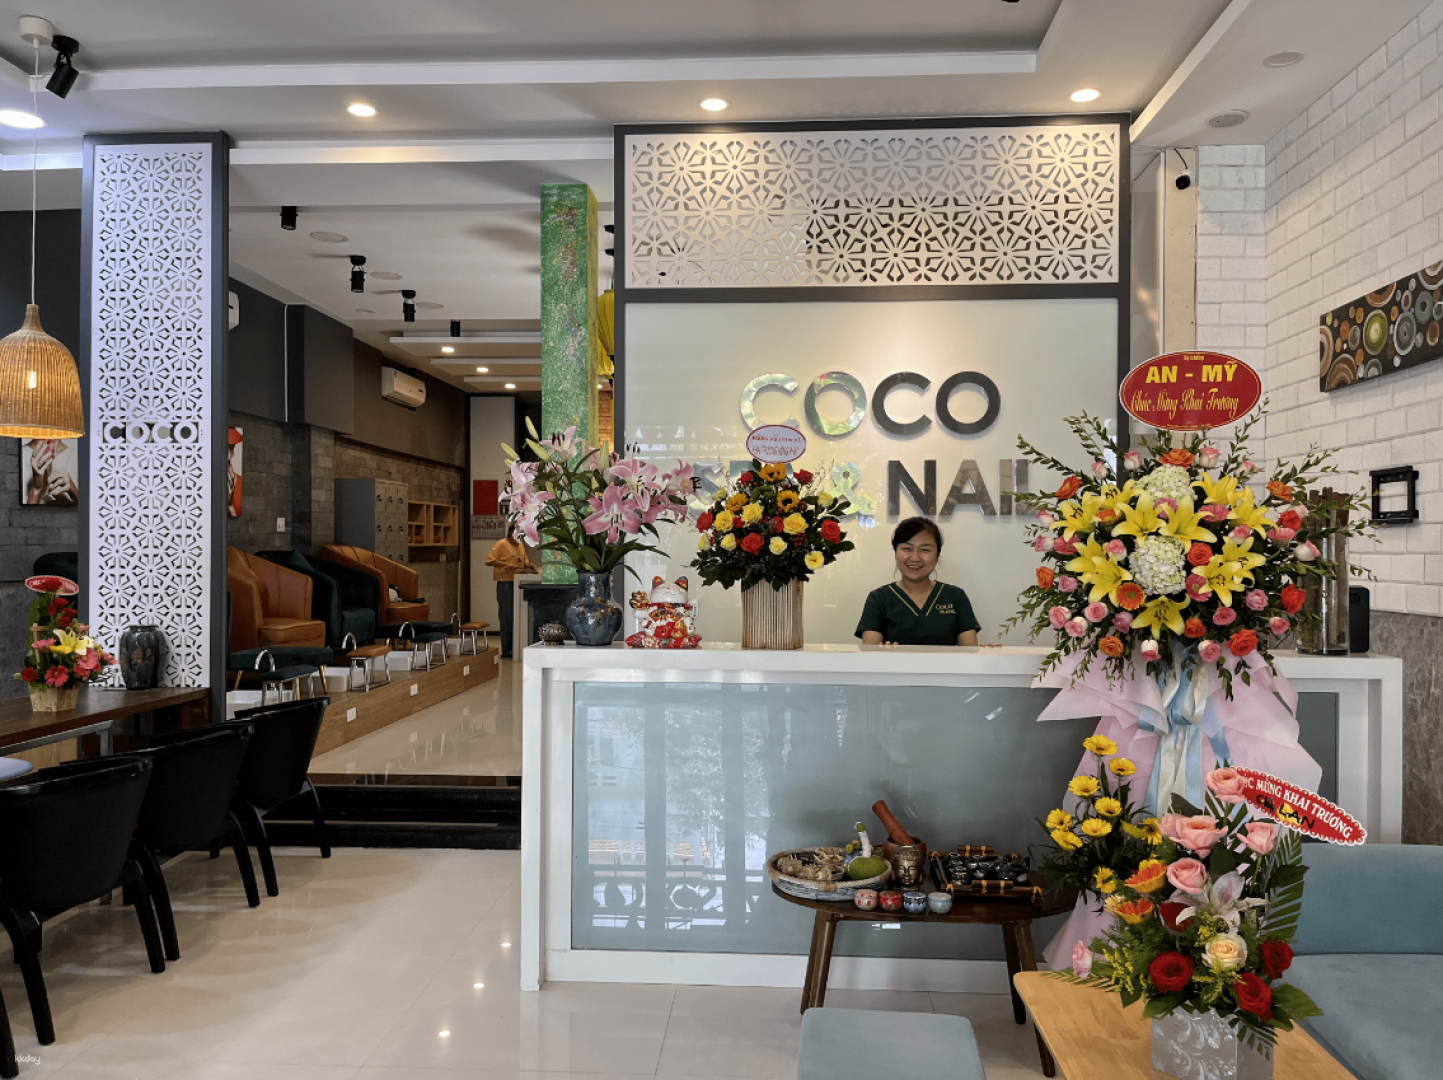 越南-會安 Coco K 水療和美甲體驗